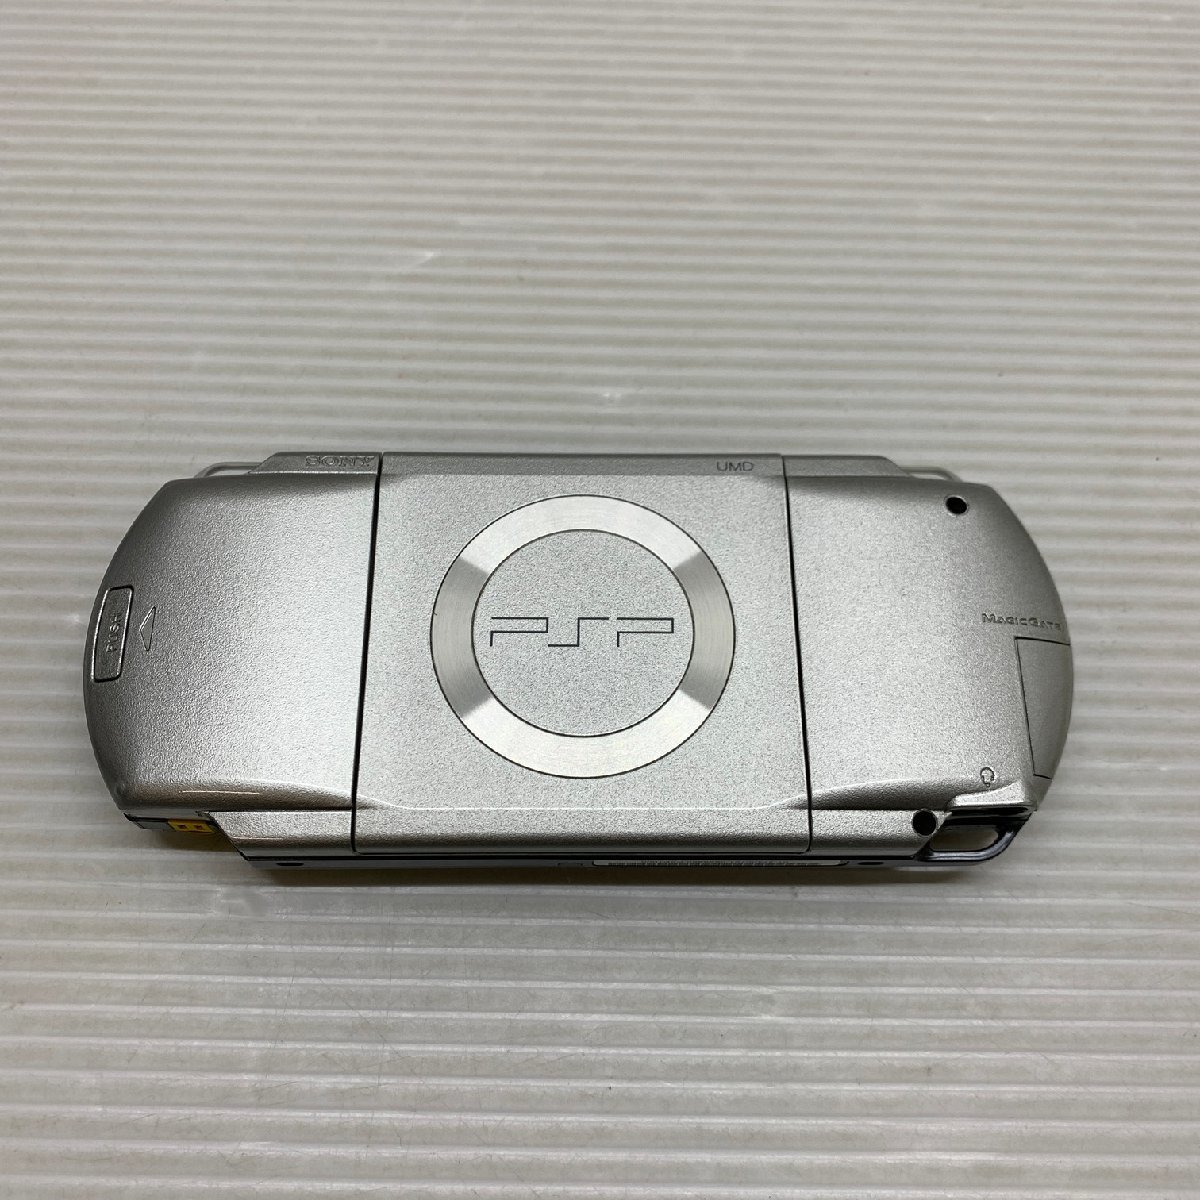 MIN【ジャンク品】 MSMG SONY PSP シルバー PSP-1000 ジャンク品 電源不可本体のみ 〈23-240311-MK-17-MIN〉_画像2